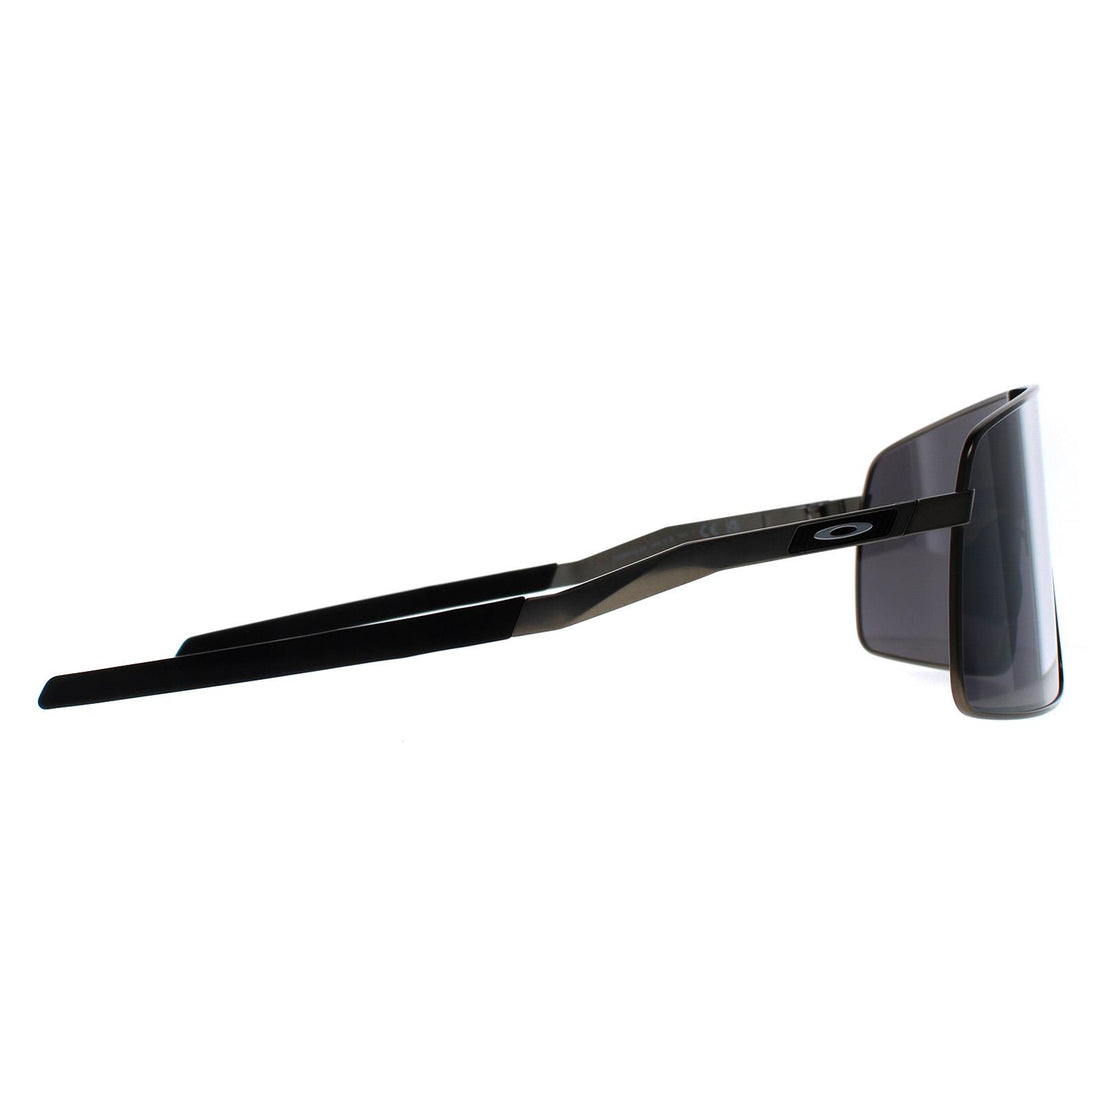 Oakley Sunglasses Sutro TI OO6013-01 Matte Gunmetal Prizm Black